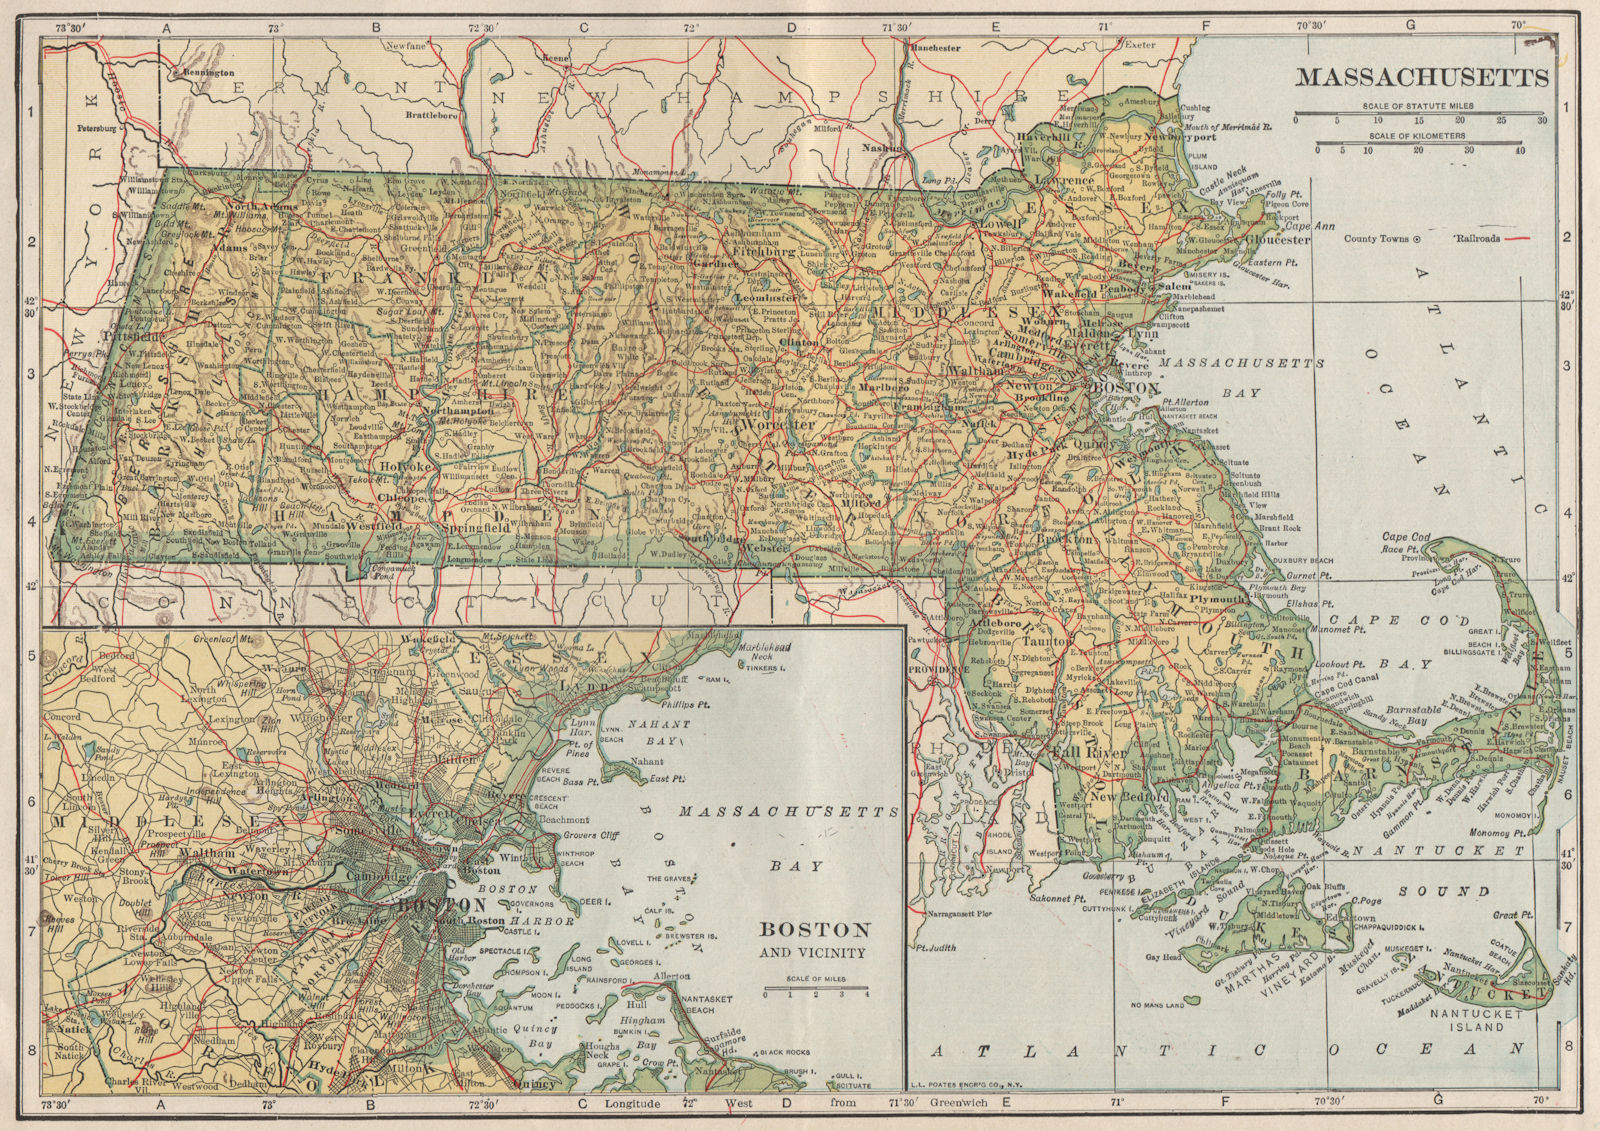 Massachusetts & Boston area state map showing railroads. POATES 1925 old